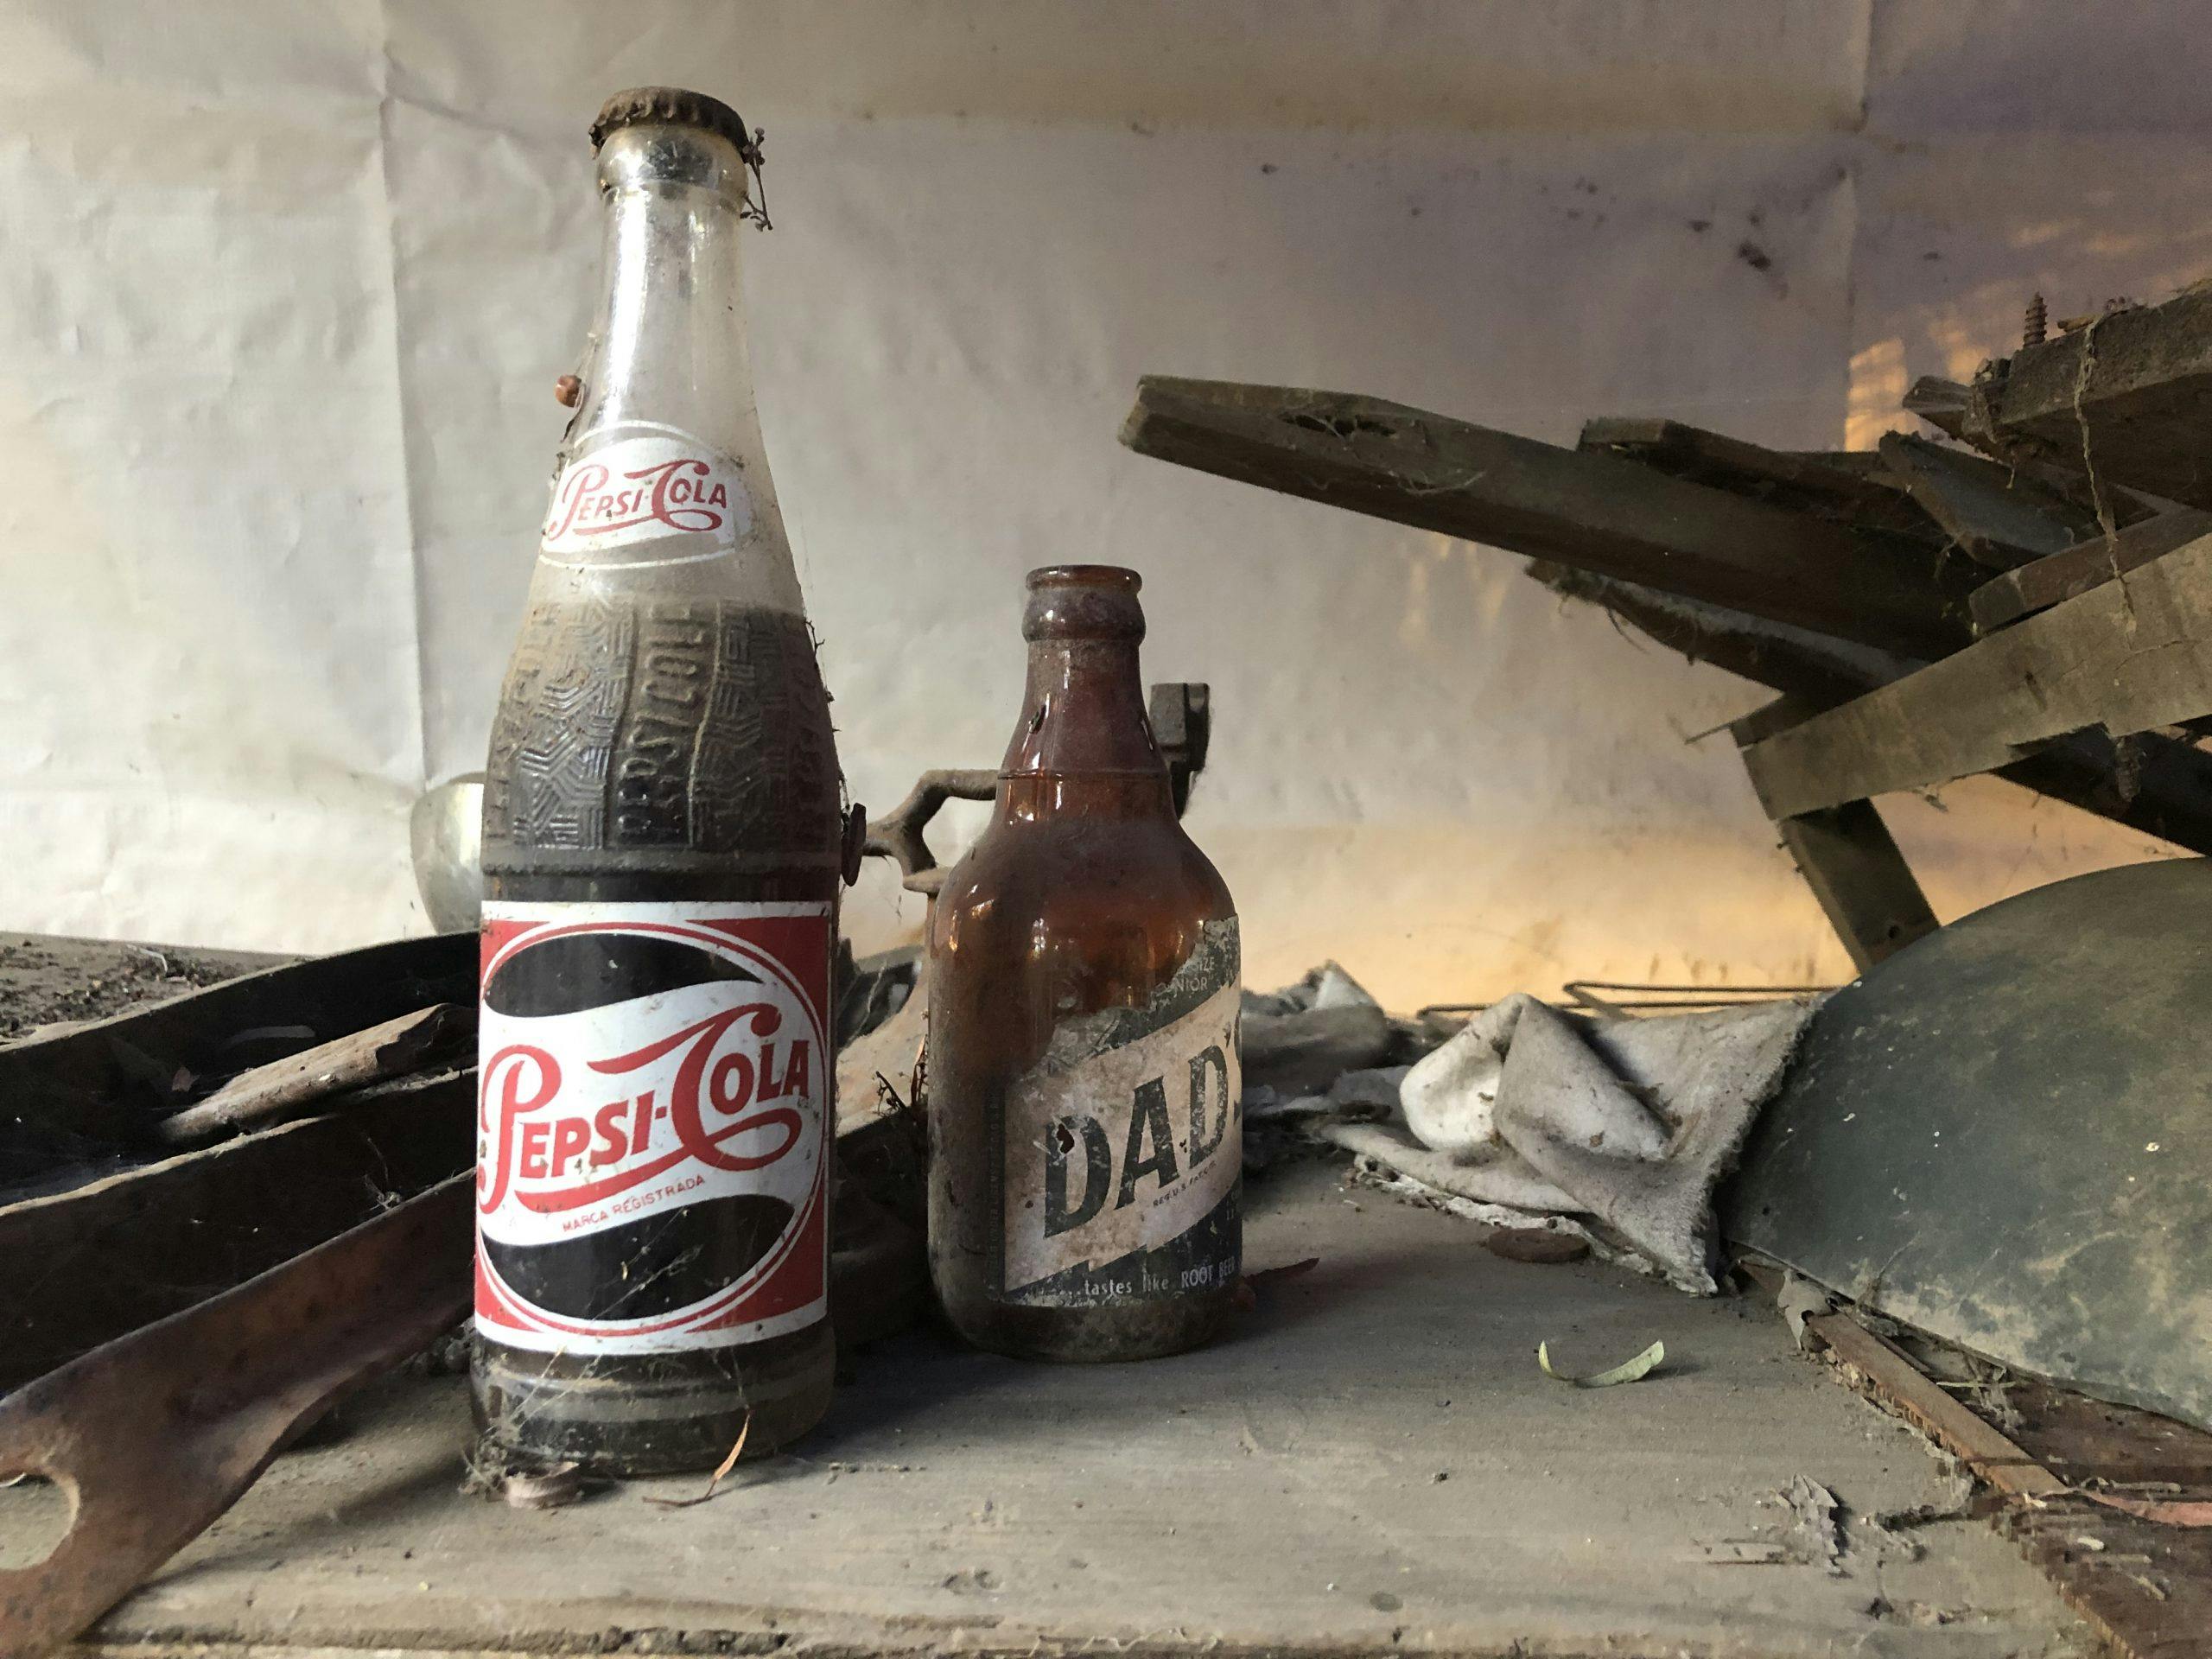 vintage pepsi cola and dads bottles